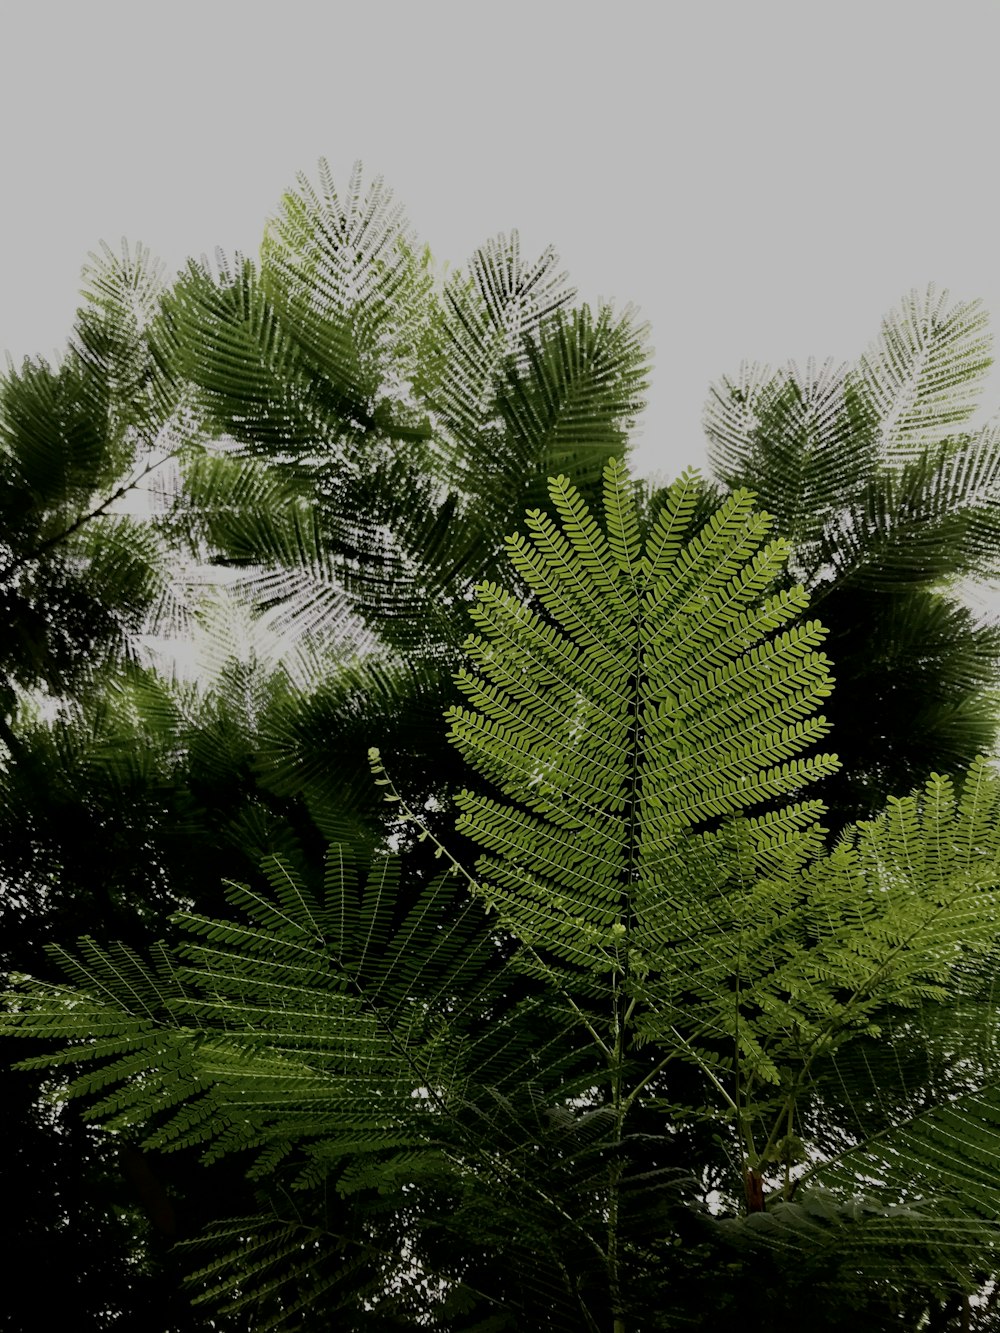 green fern plant under white sky during daytime